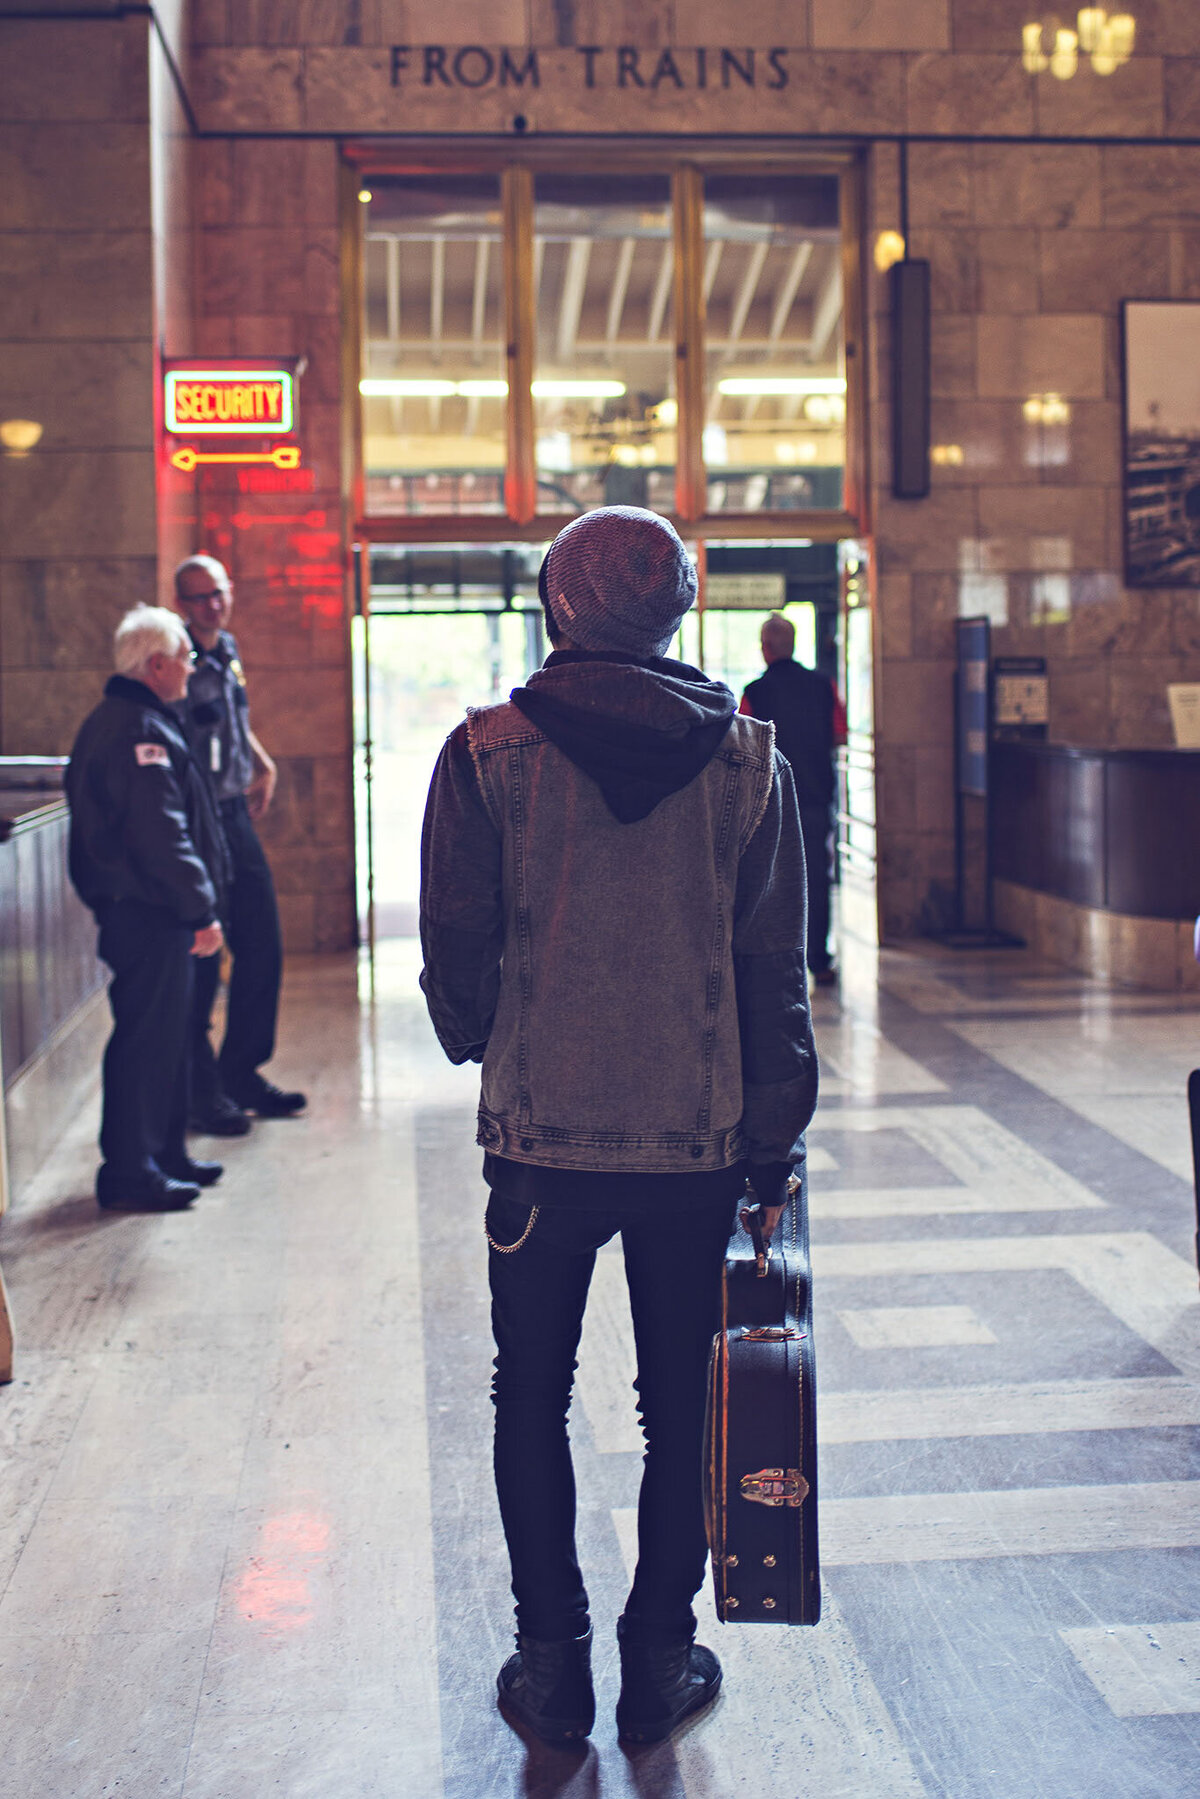 Guy walking in train station carrying guitar case